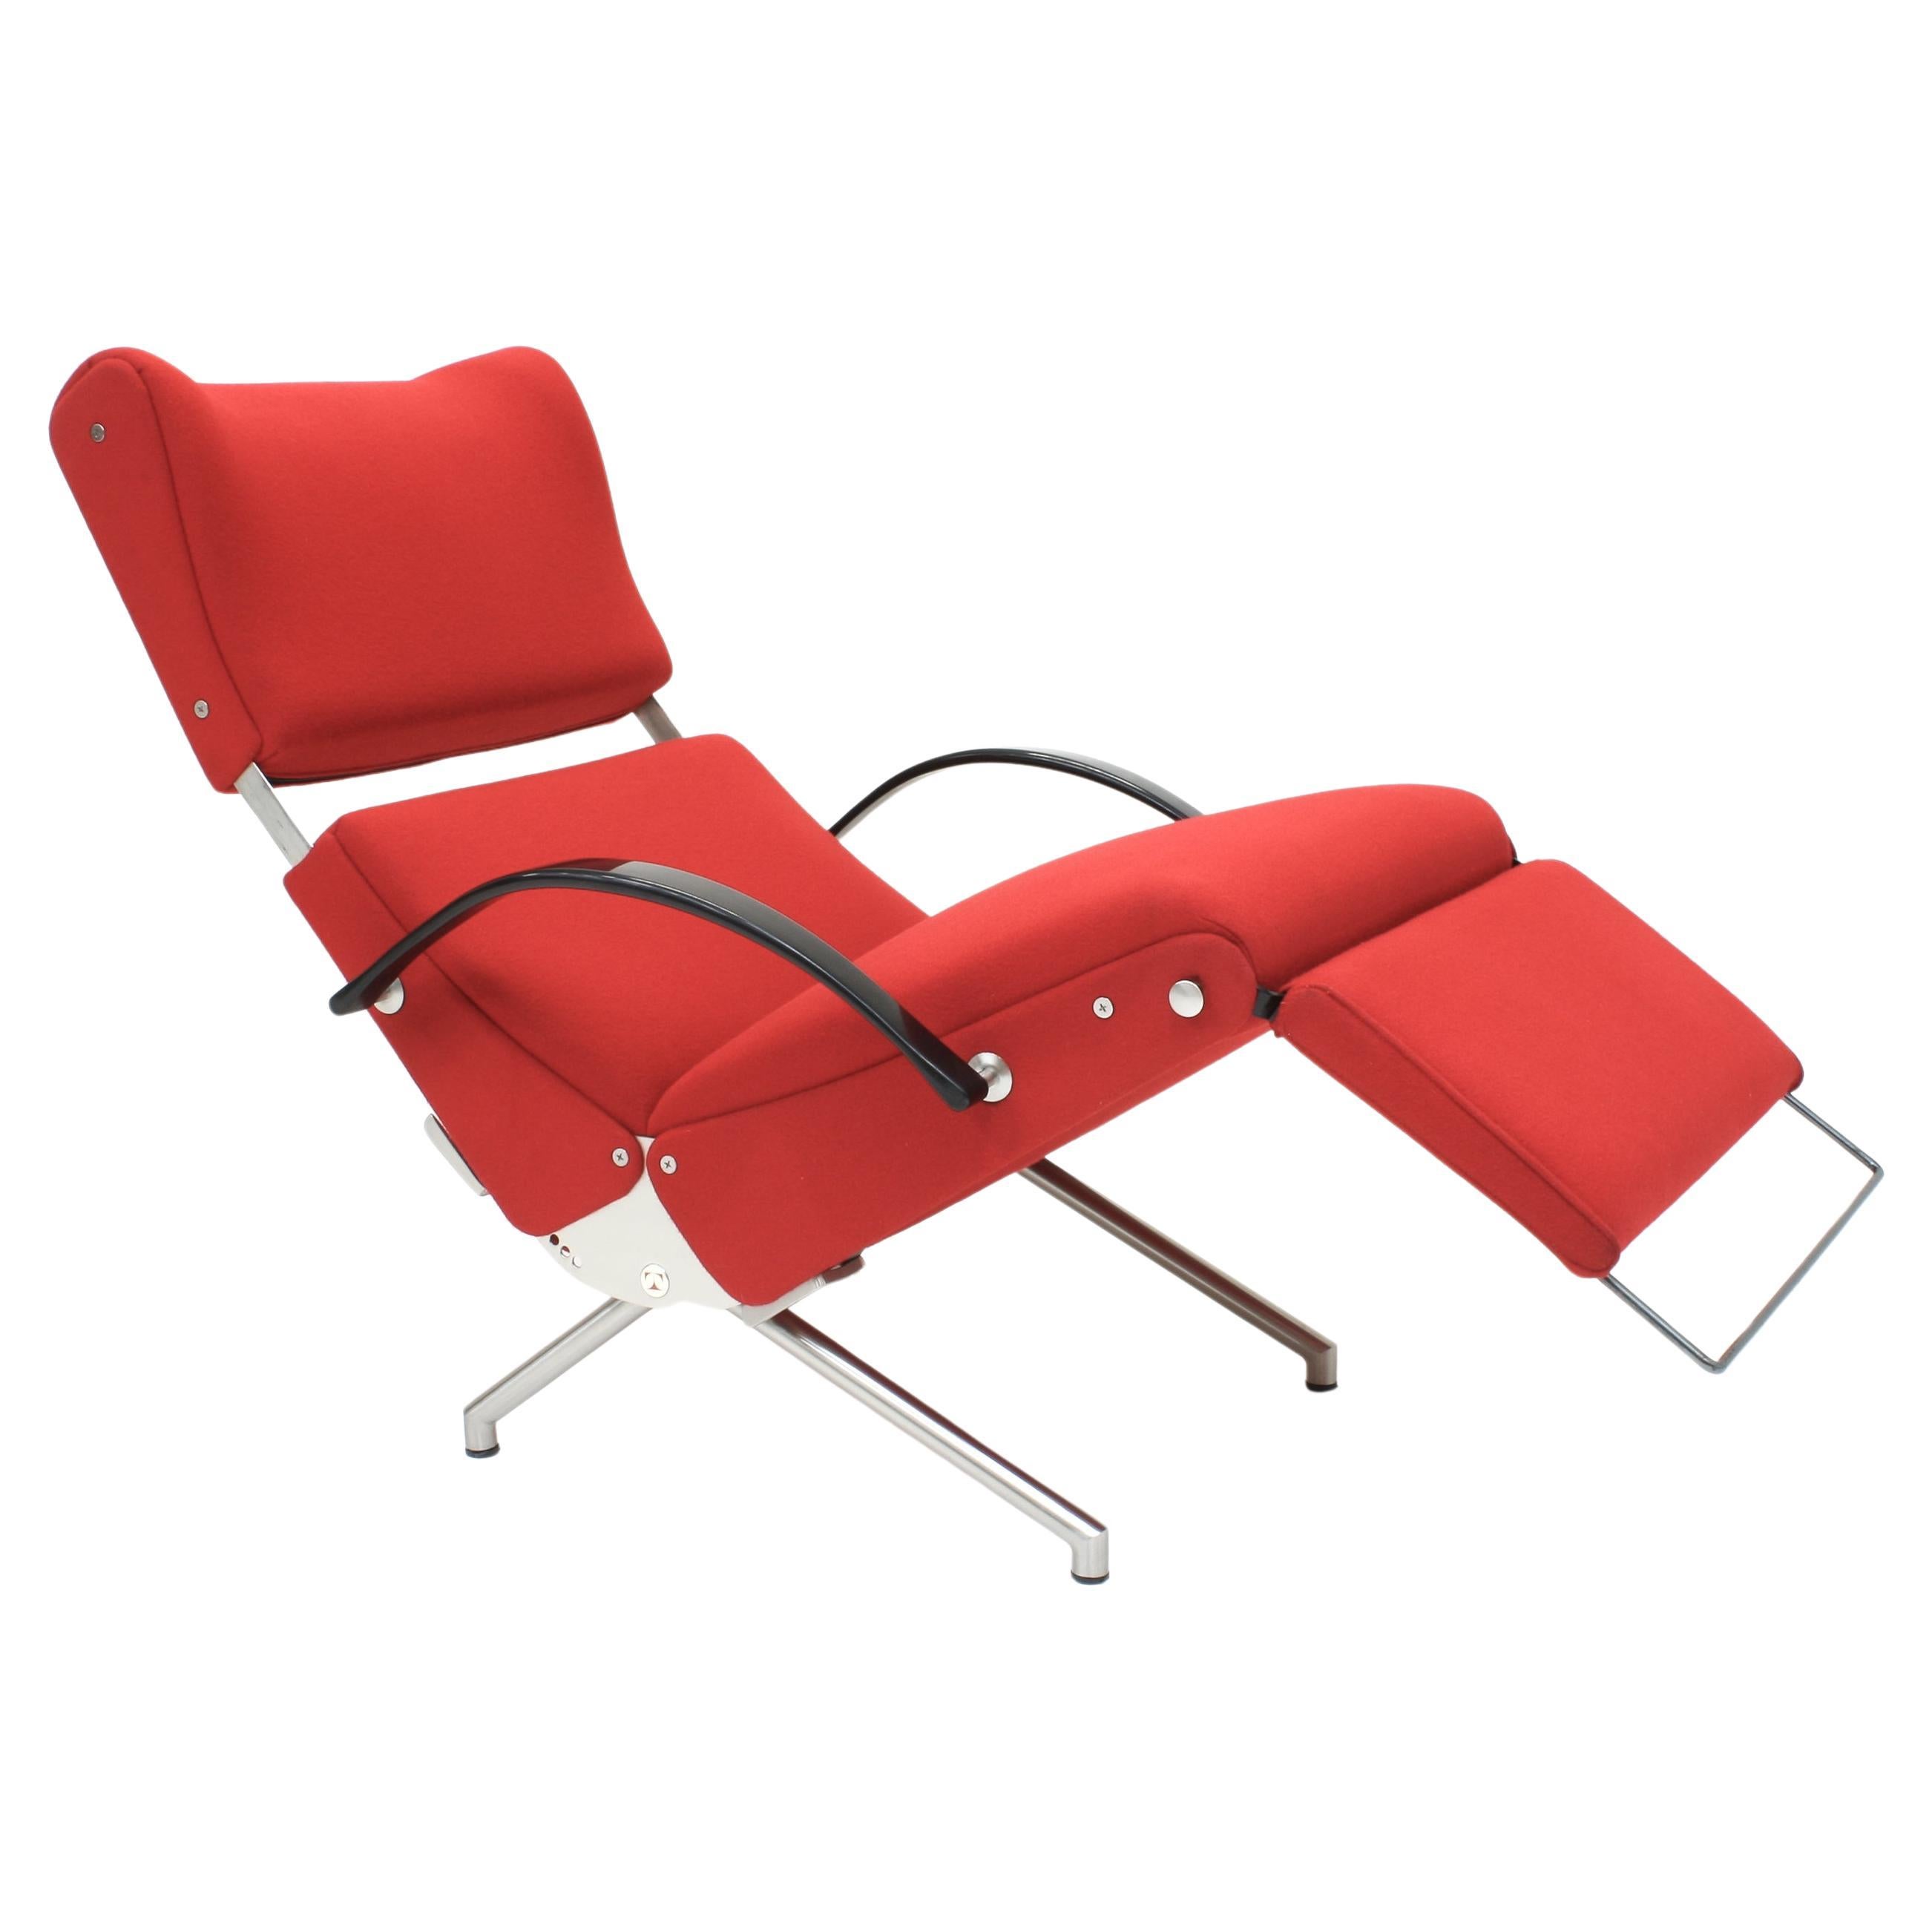 Adjustable P40 Lounge Chair by Osvaldo Borsani for Tecno spa, Italy